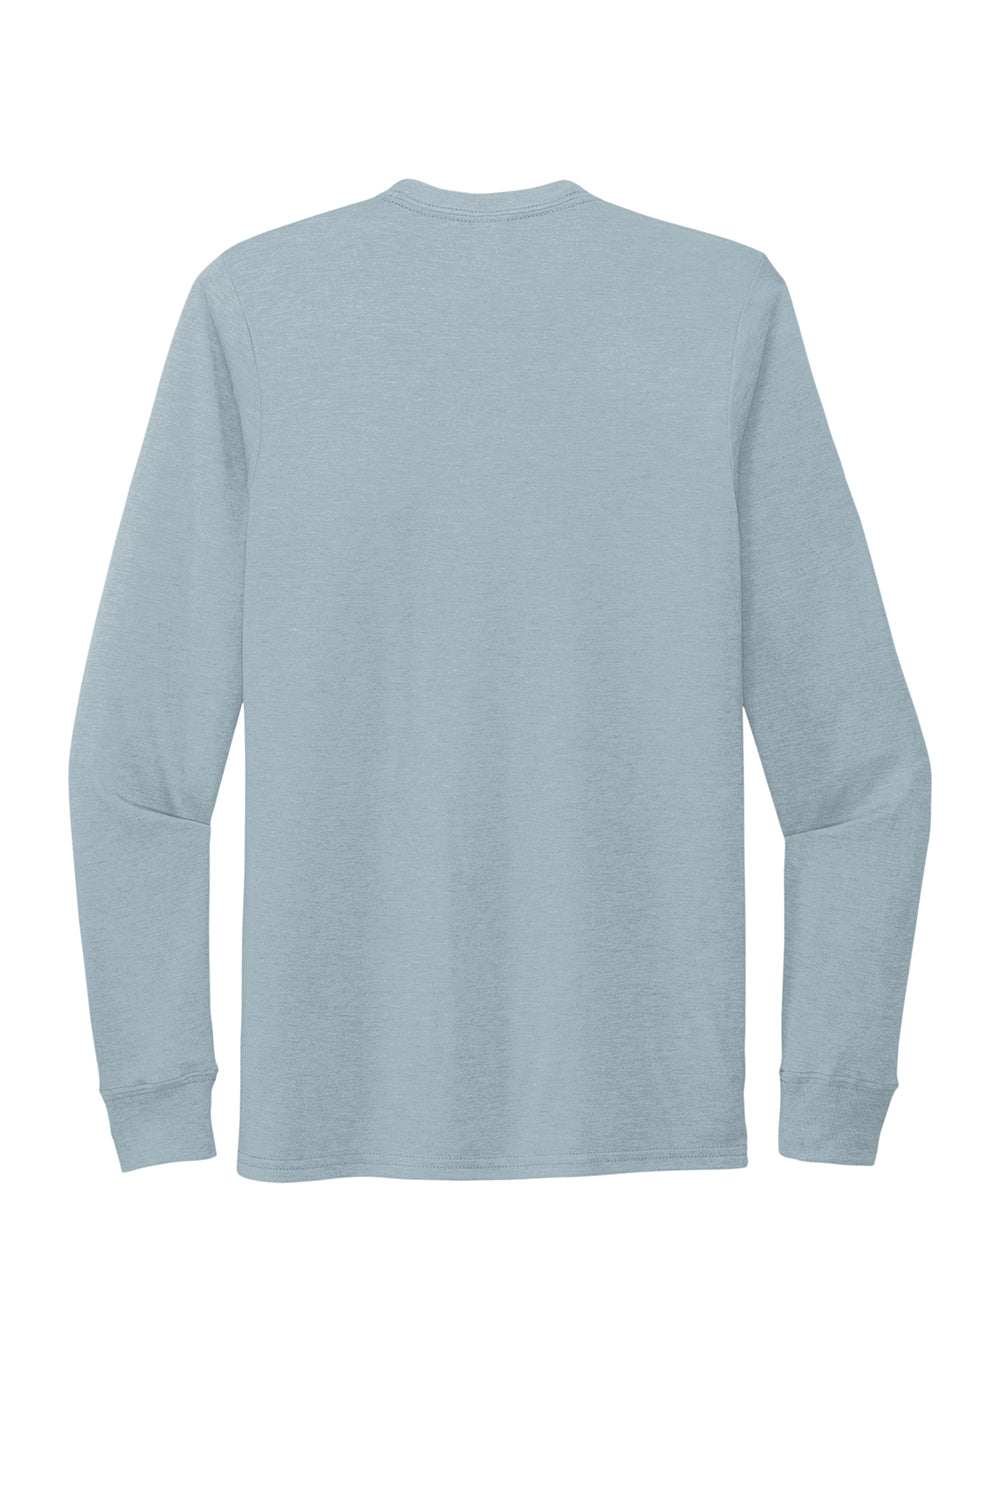 Allmade AL6004 Mens Long Sleeve Crewneck T-Shirt I Like You Blue Flat Back